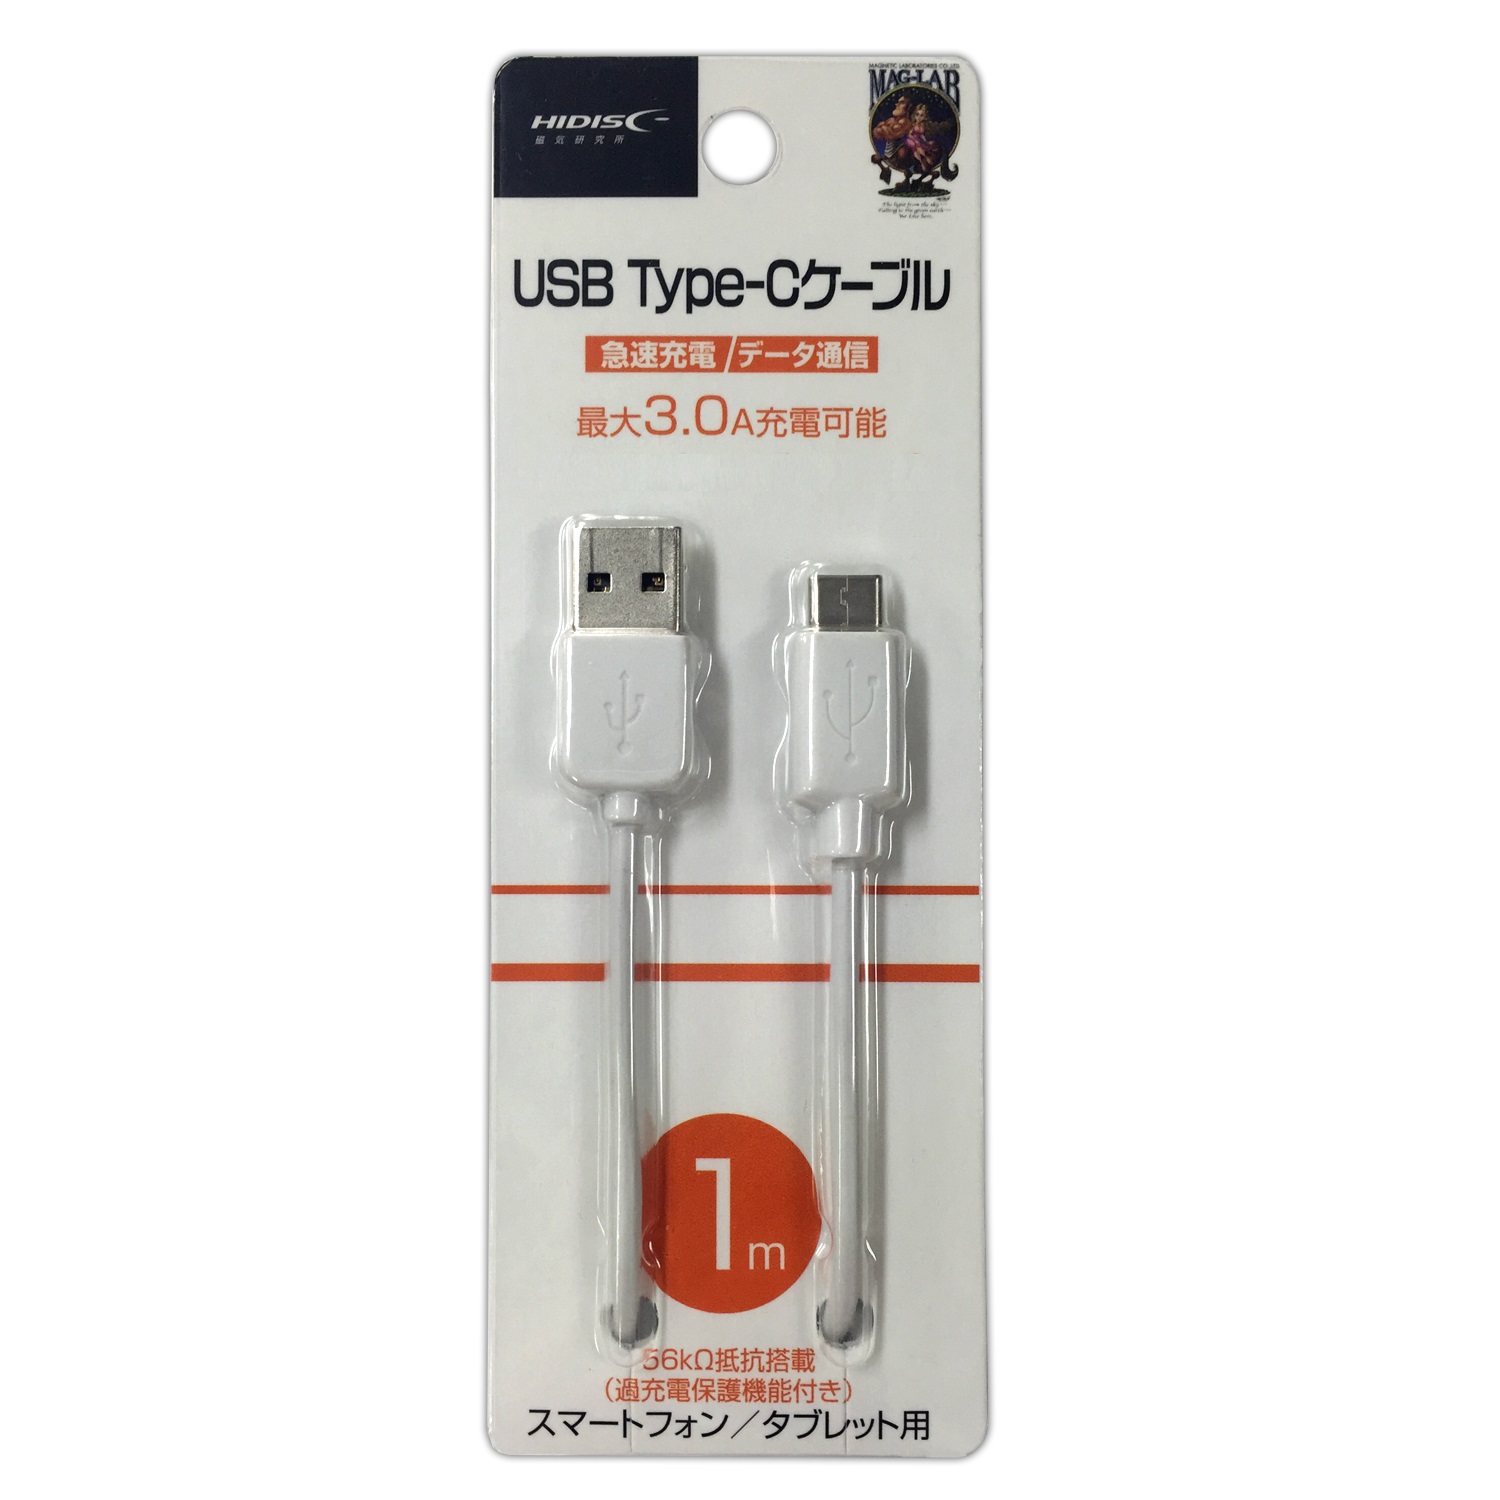 HIDISC USB Type-Cケーブル 1m ホワイト 最大3.0A充電可能 過充電保護機能付き HD-TCC1WH